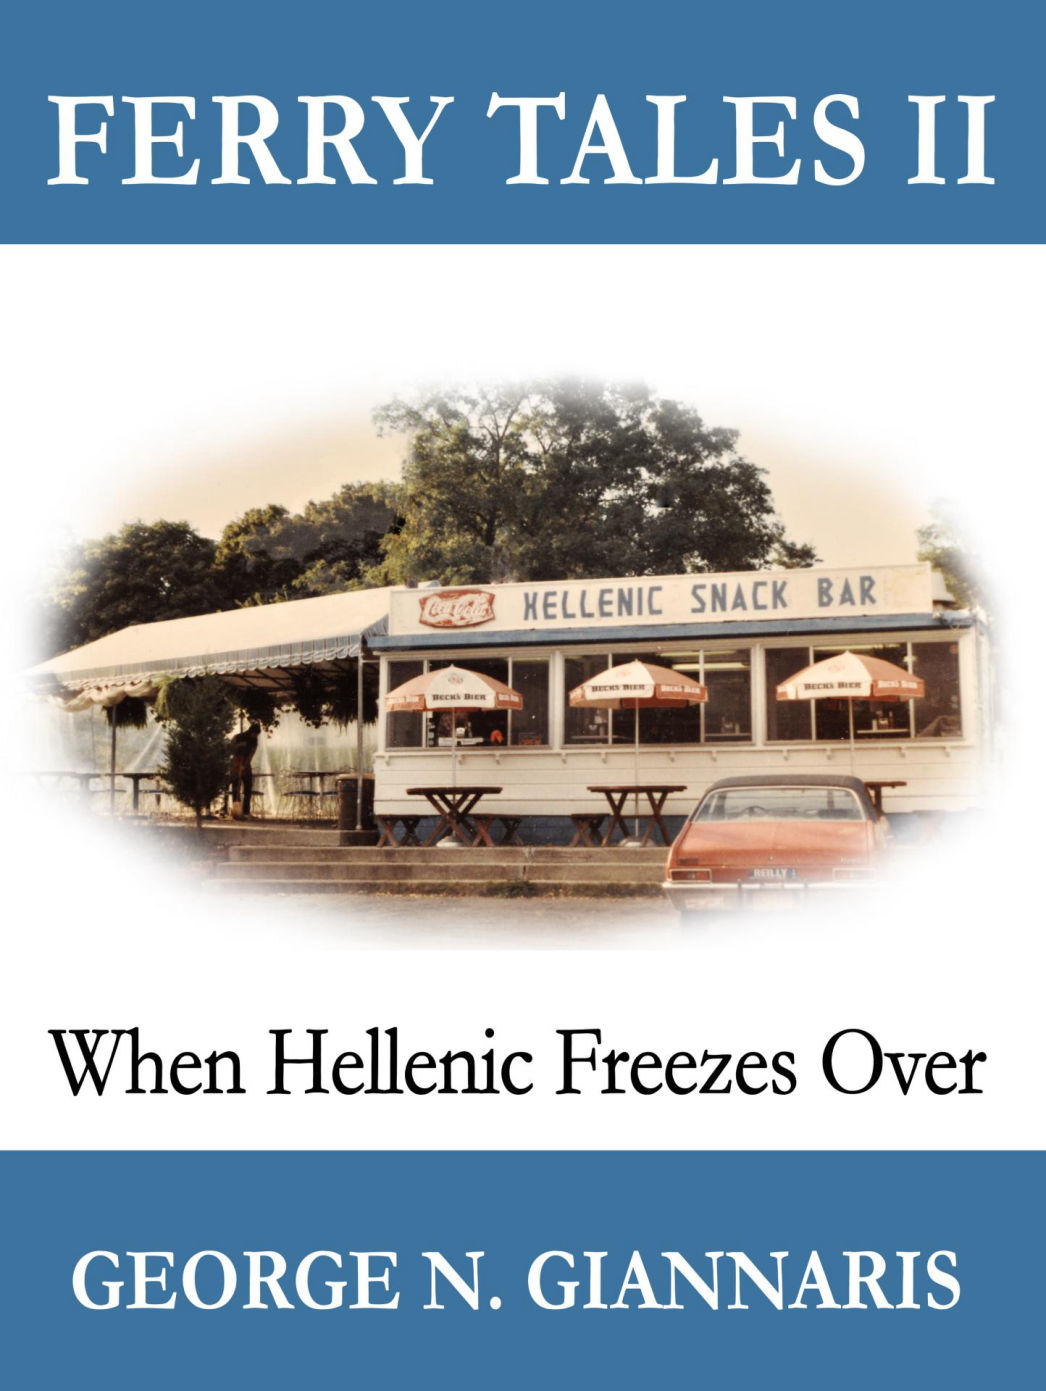 Ferry Tales II: When Hellenic Freezes Over